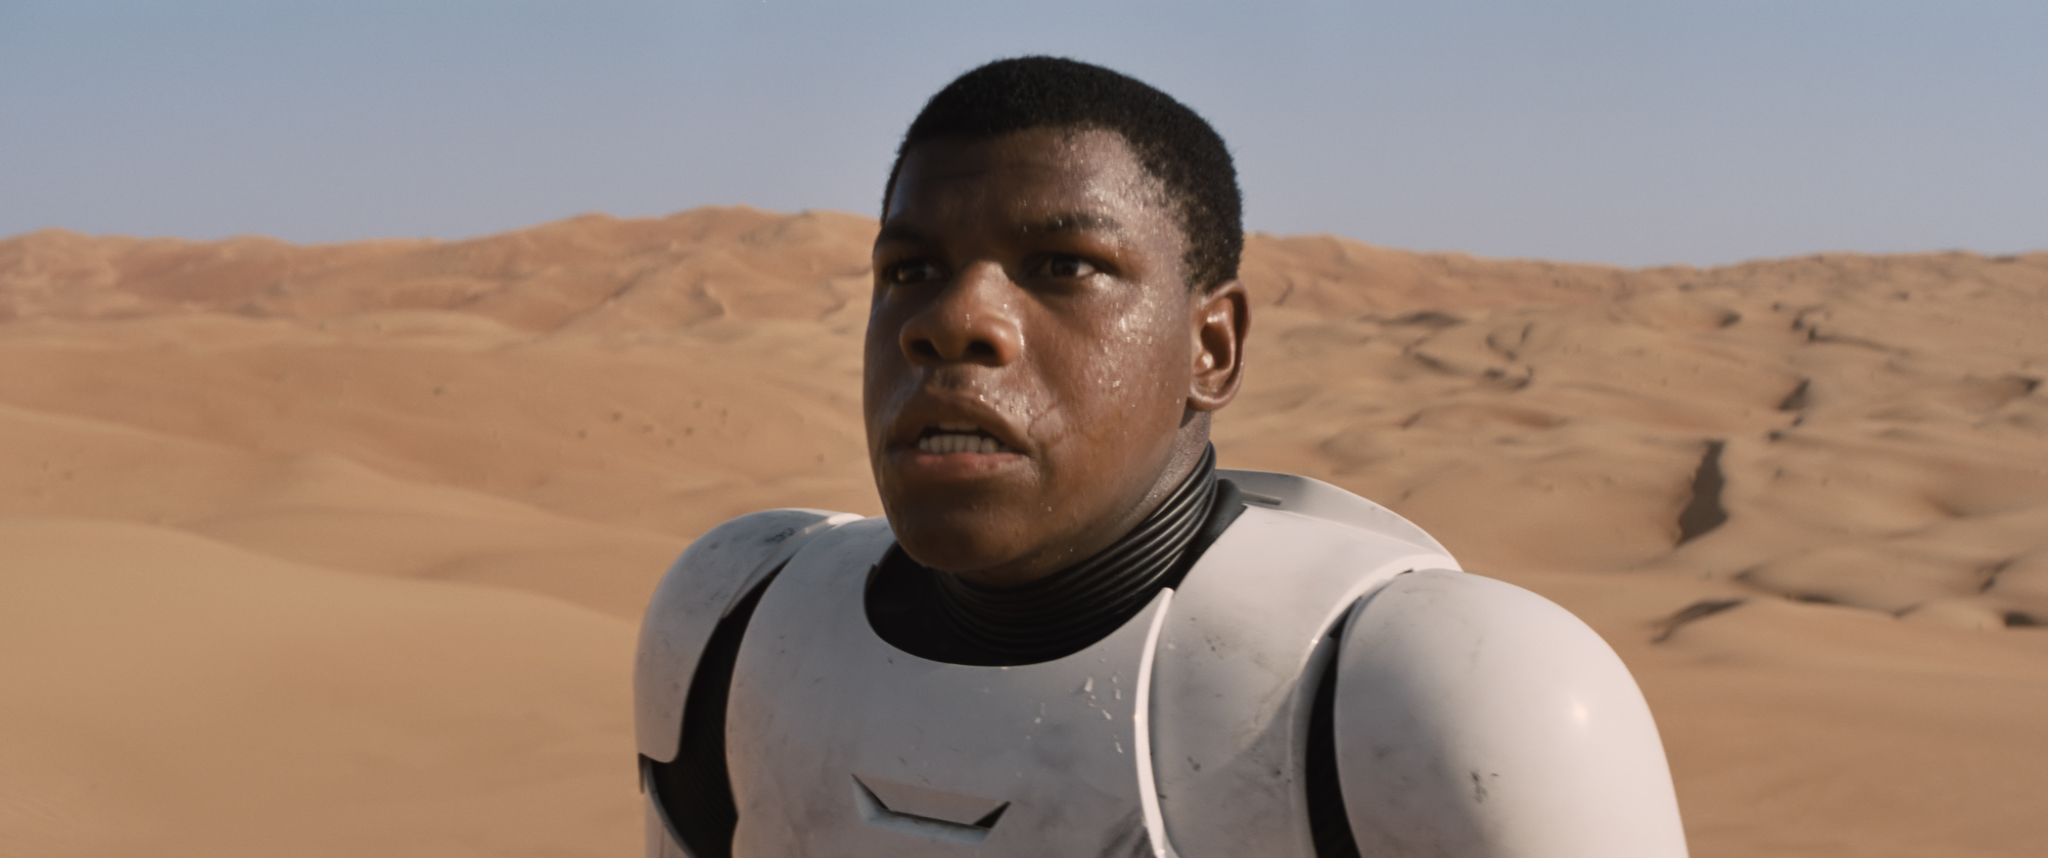 John Boyega portrays a stormtrooper in the new Star Wars movie. (Walt Disney Studios Motion Pictures)